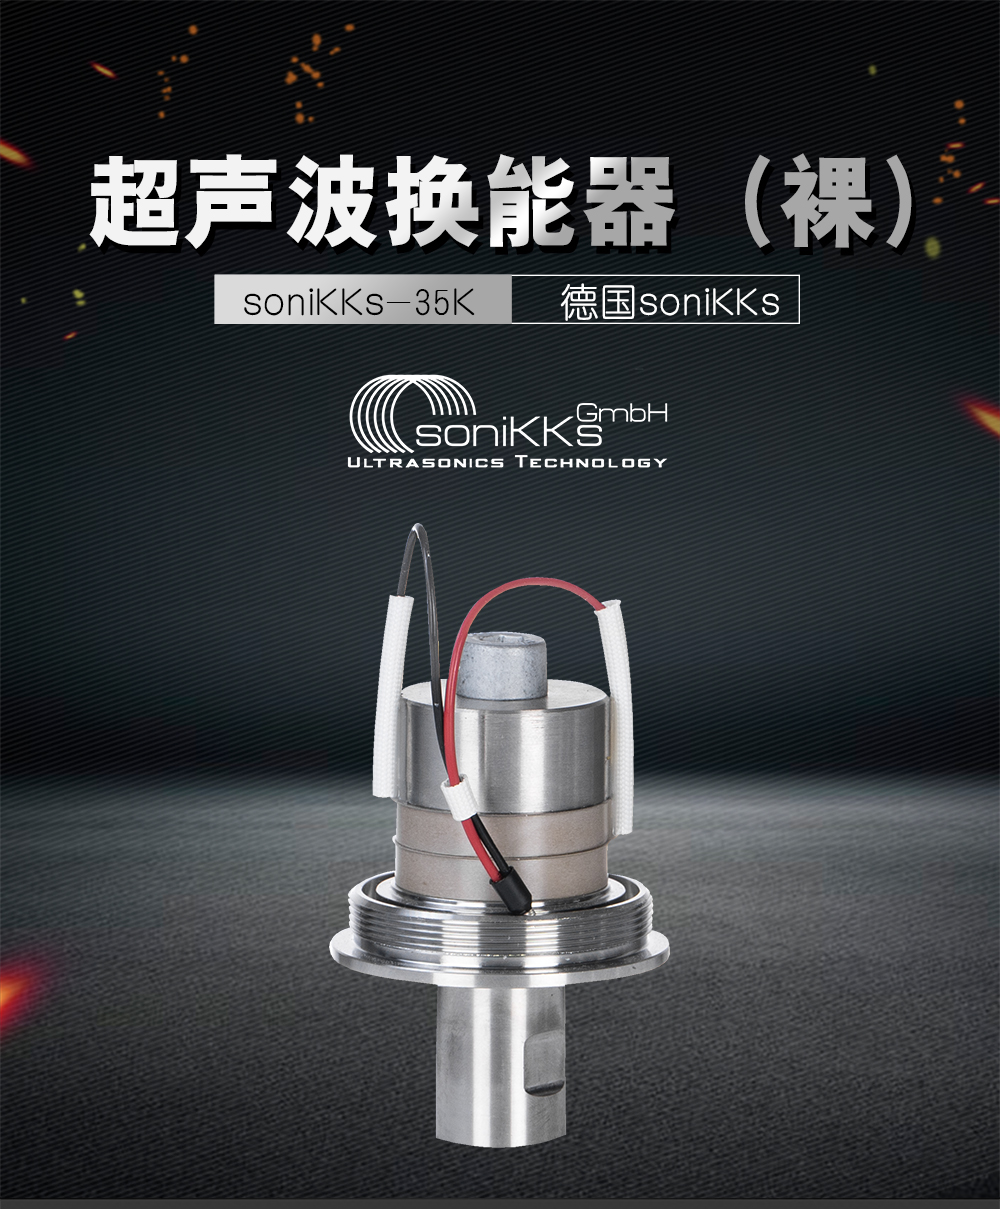 SoniKKs-35K超声波换能器（裸）介绍